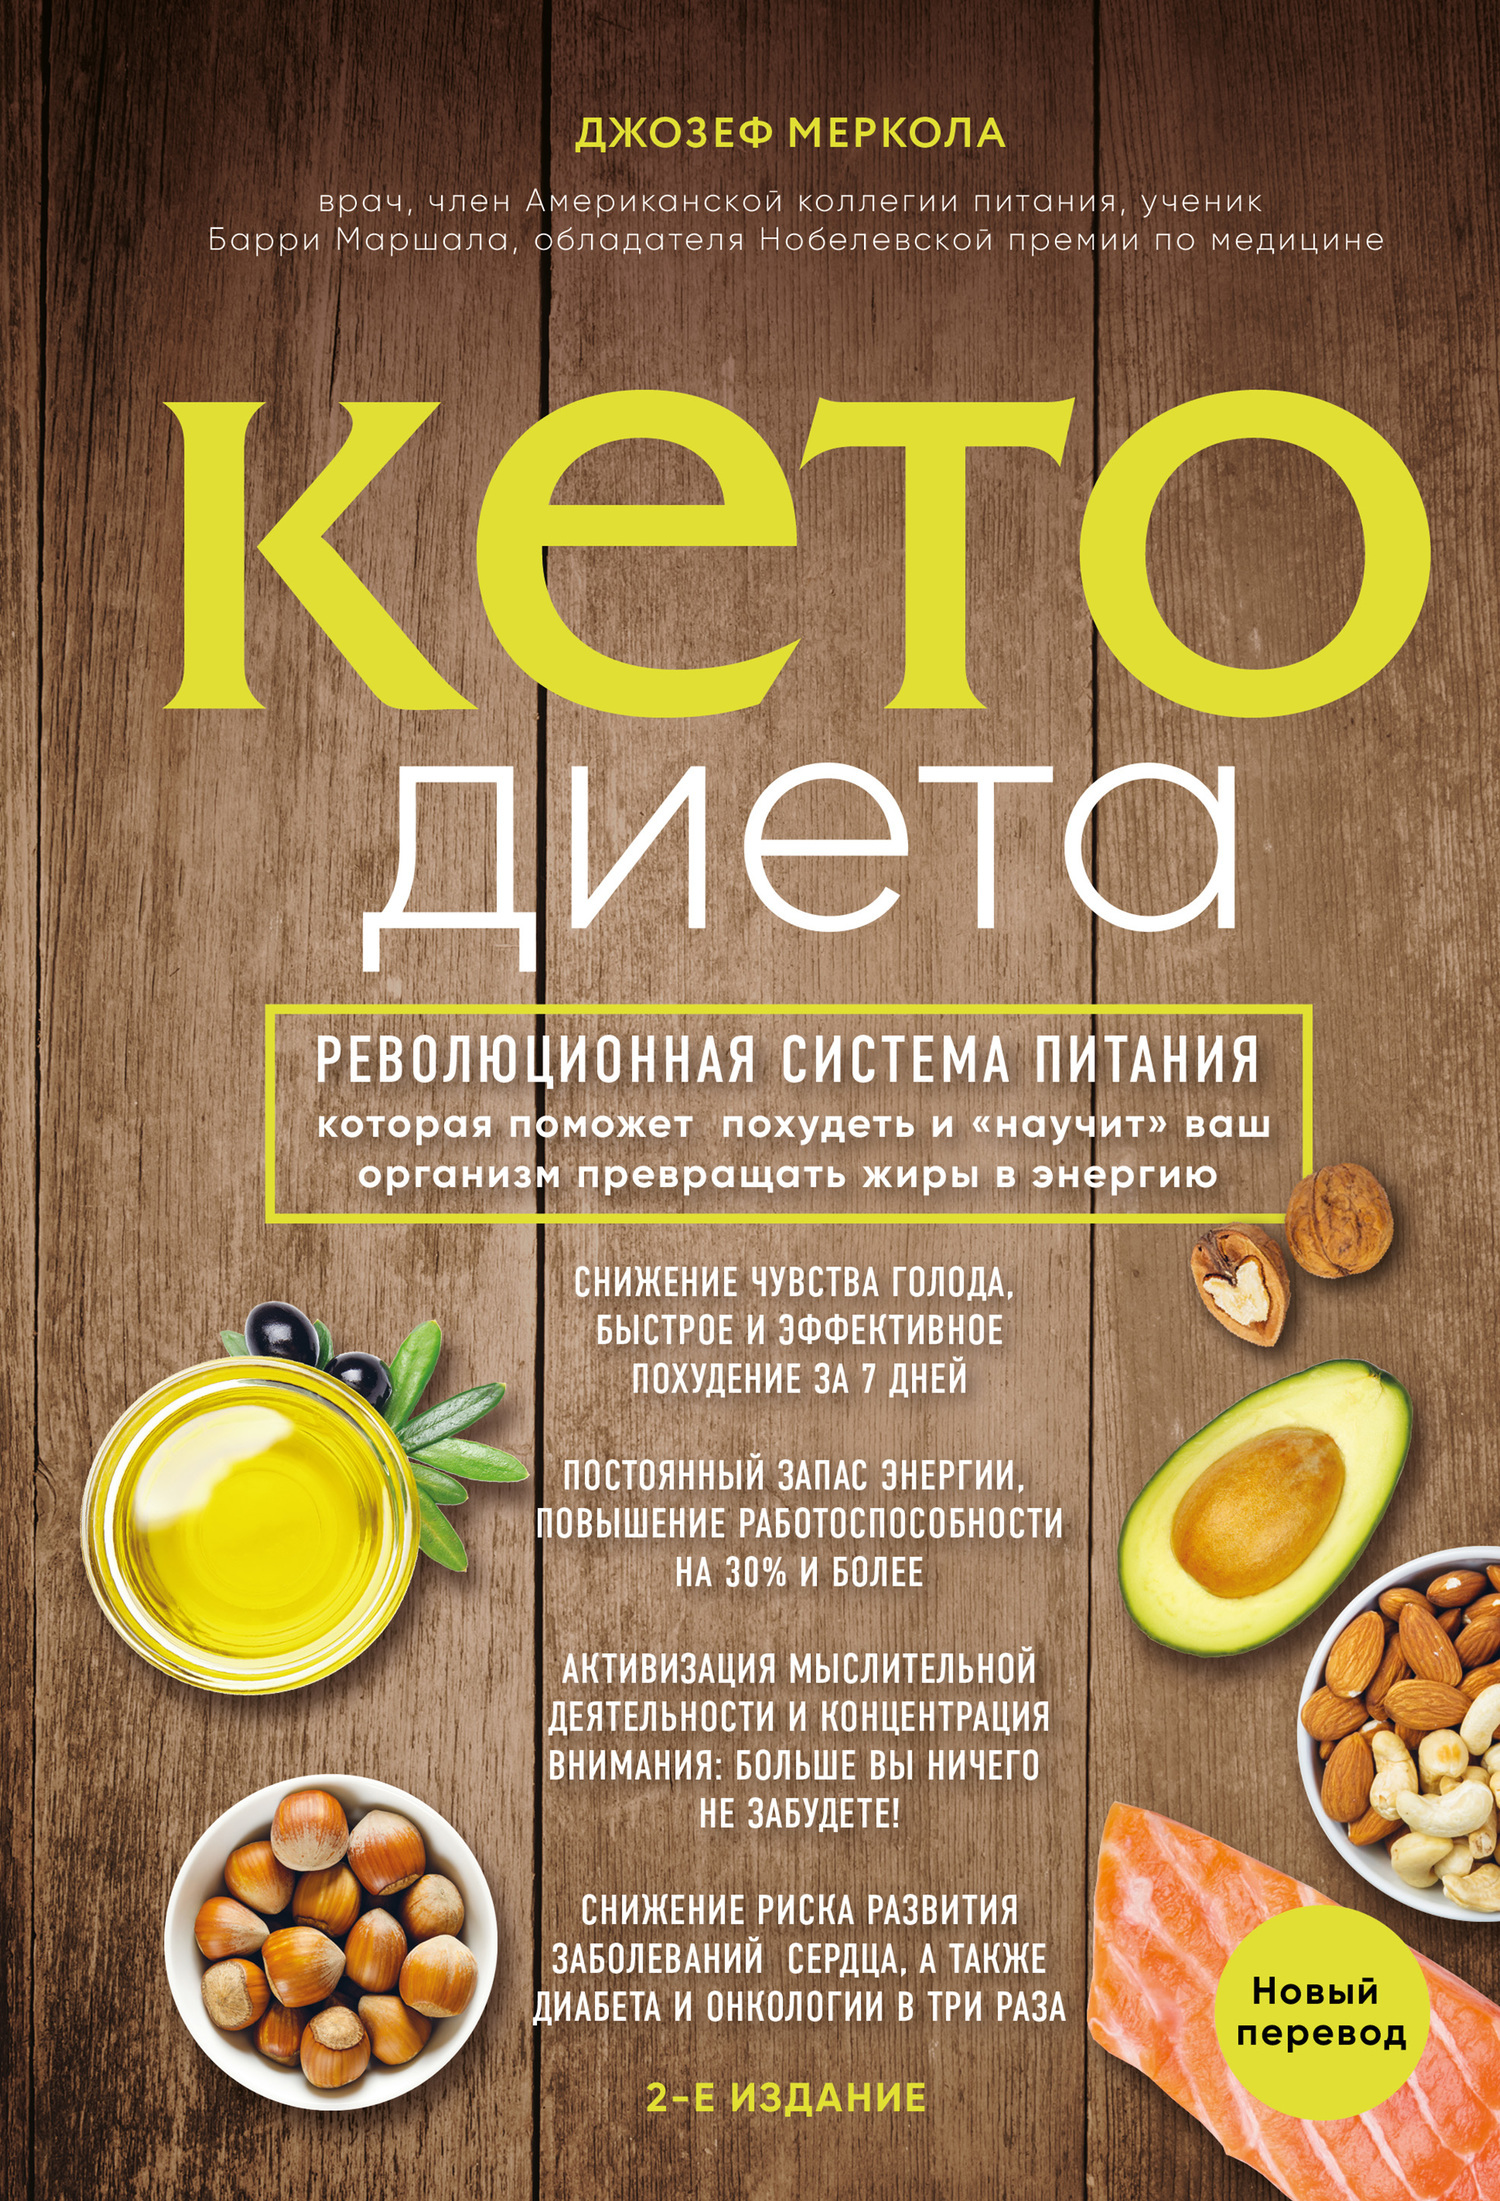 Dieta Ketogenica - law carb